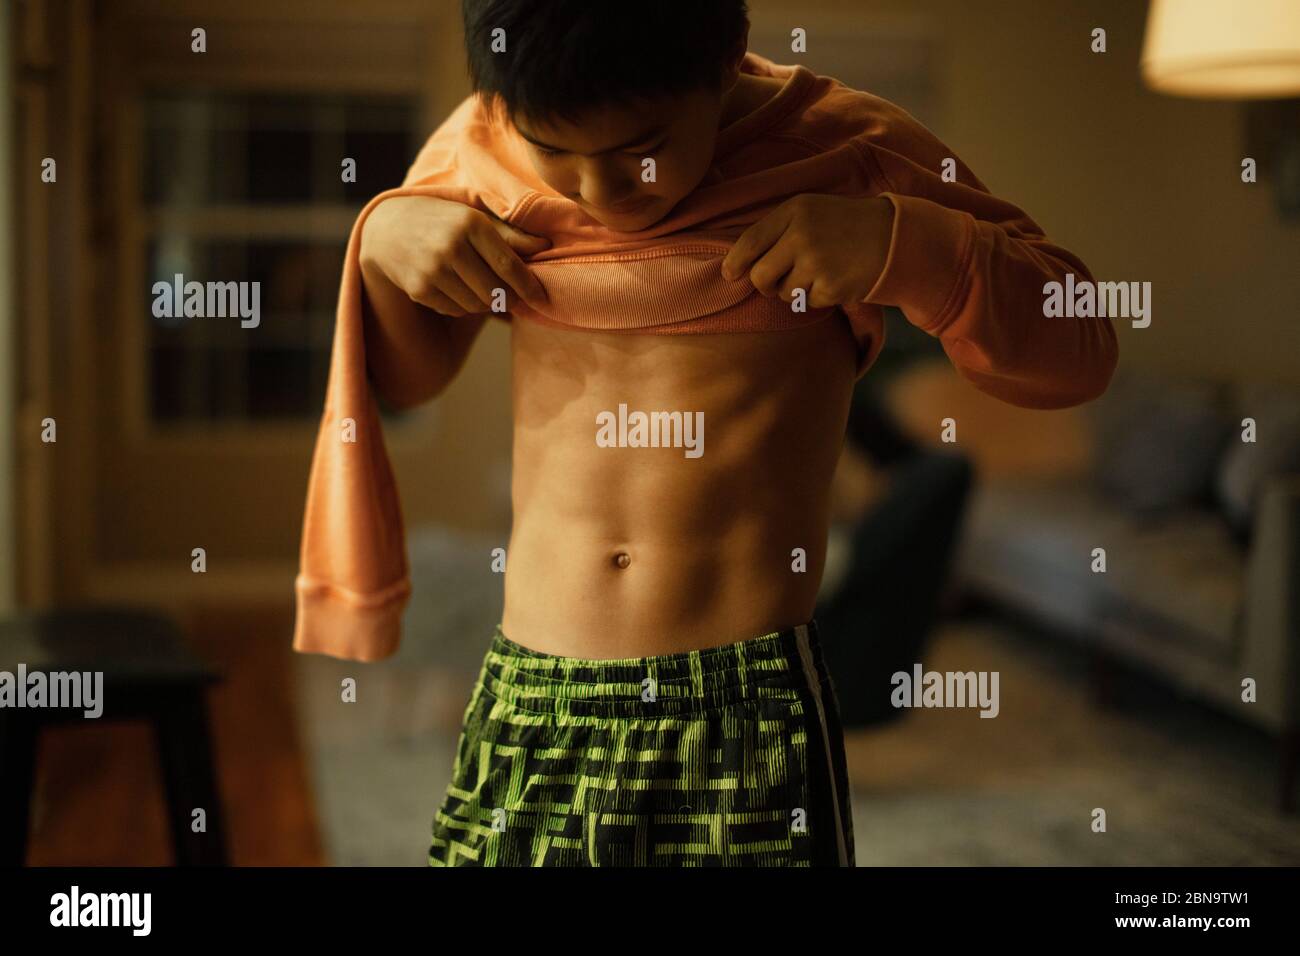 A 12-year old boy flexes his abdomen muscles Stock Photo